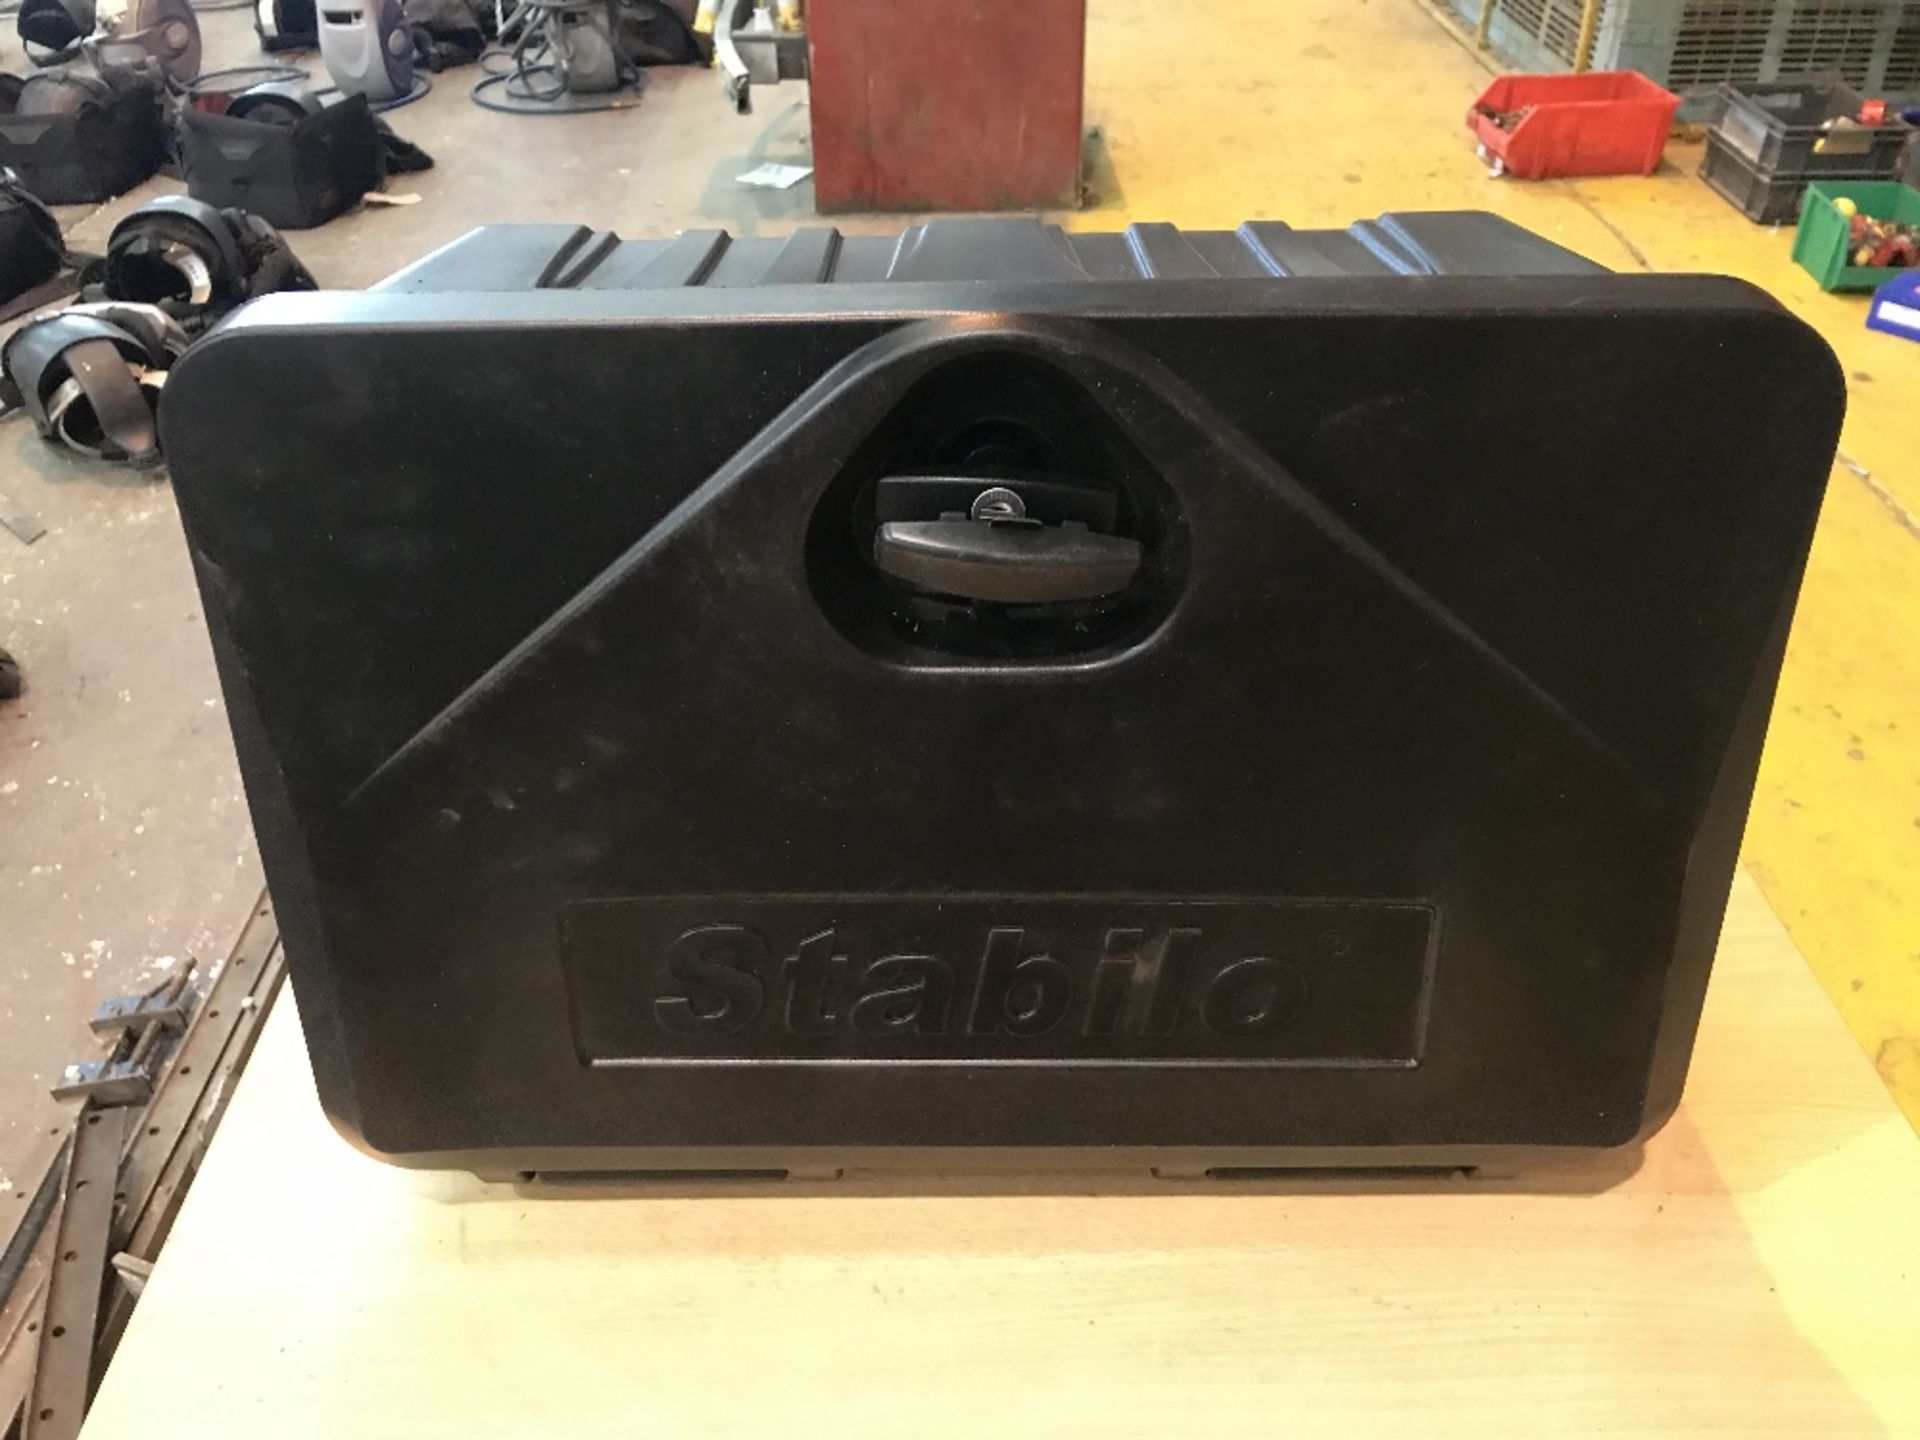 (6) Stabilo Slick-Box 500-3 Brand New with Keys - Image 3 of 5